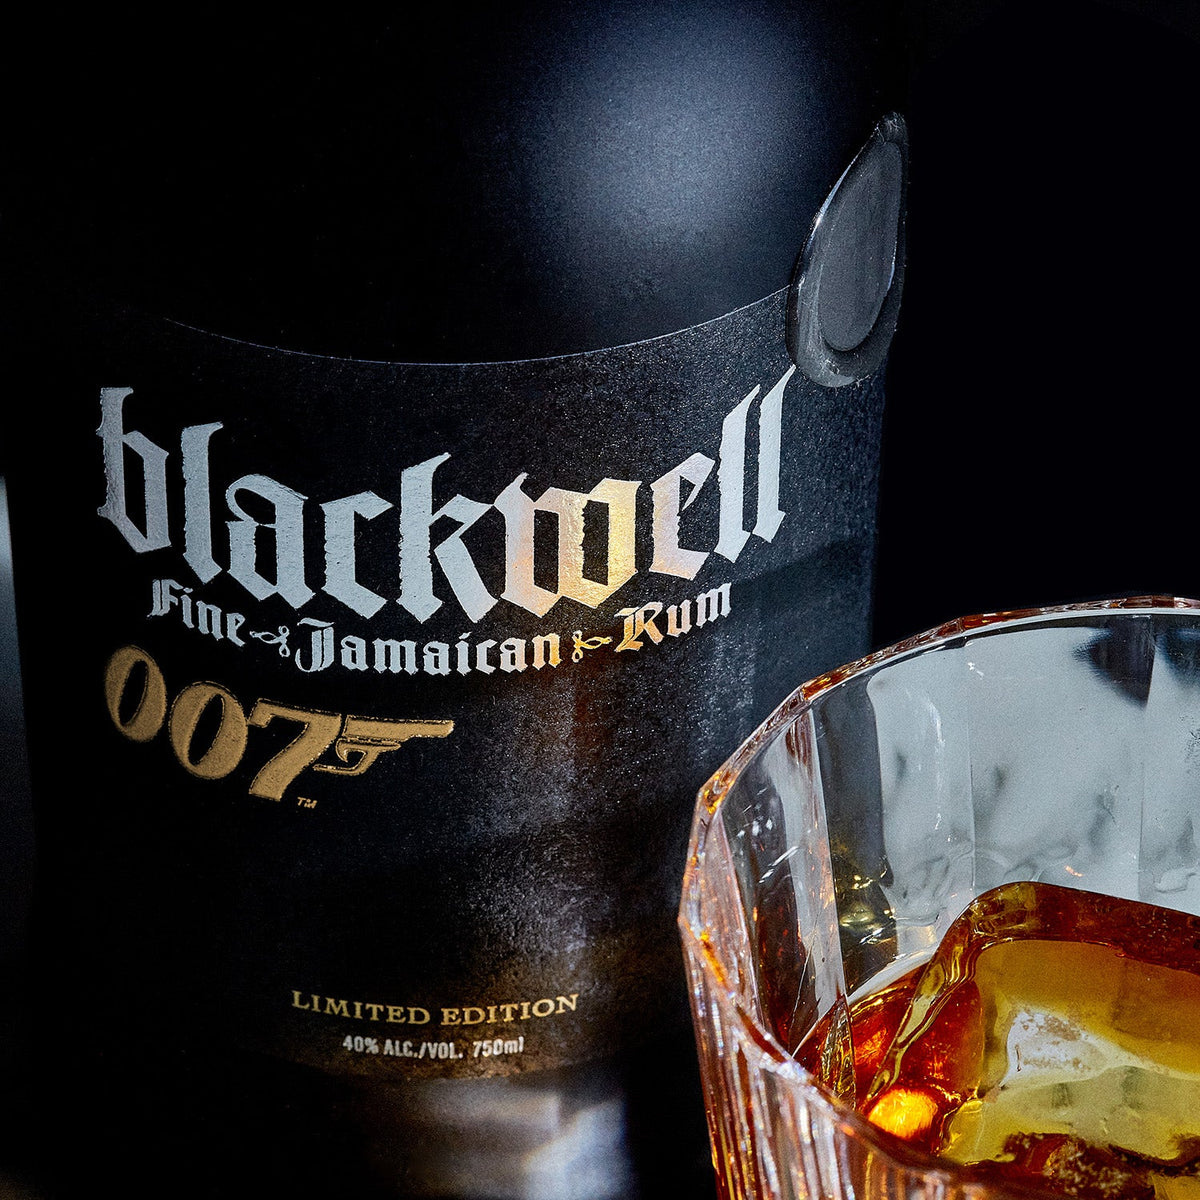 James Bond 007 Jamaican Rum - By Blackwell Rum (70cl) (US)